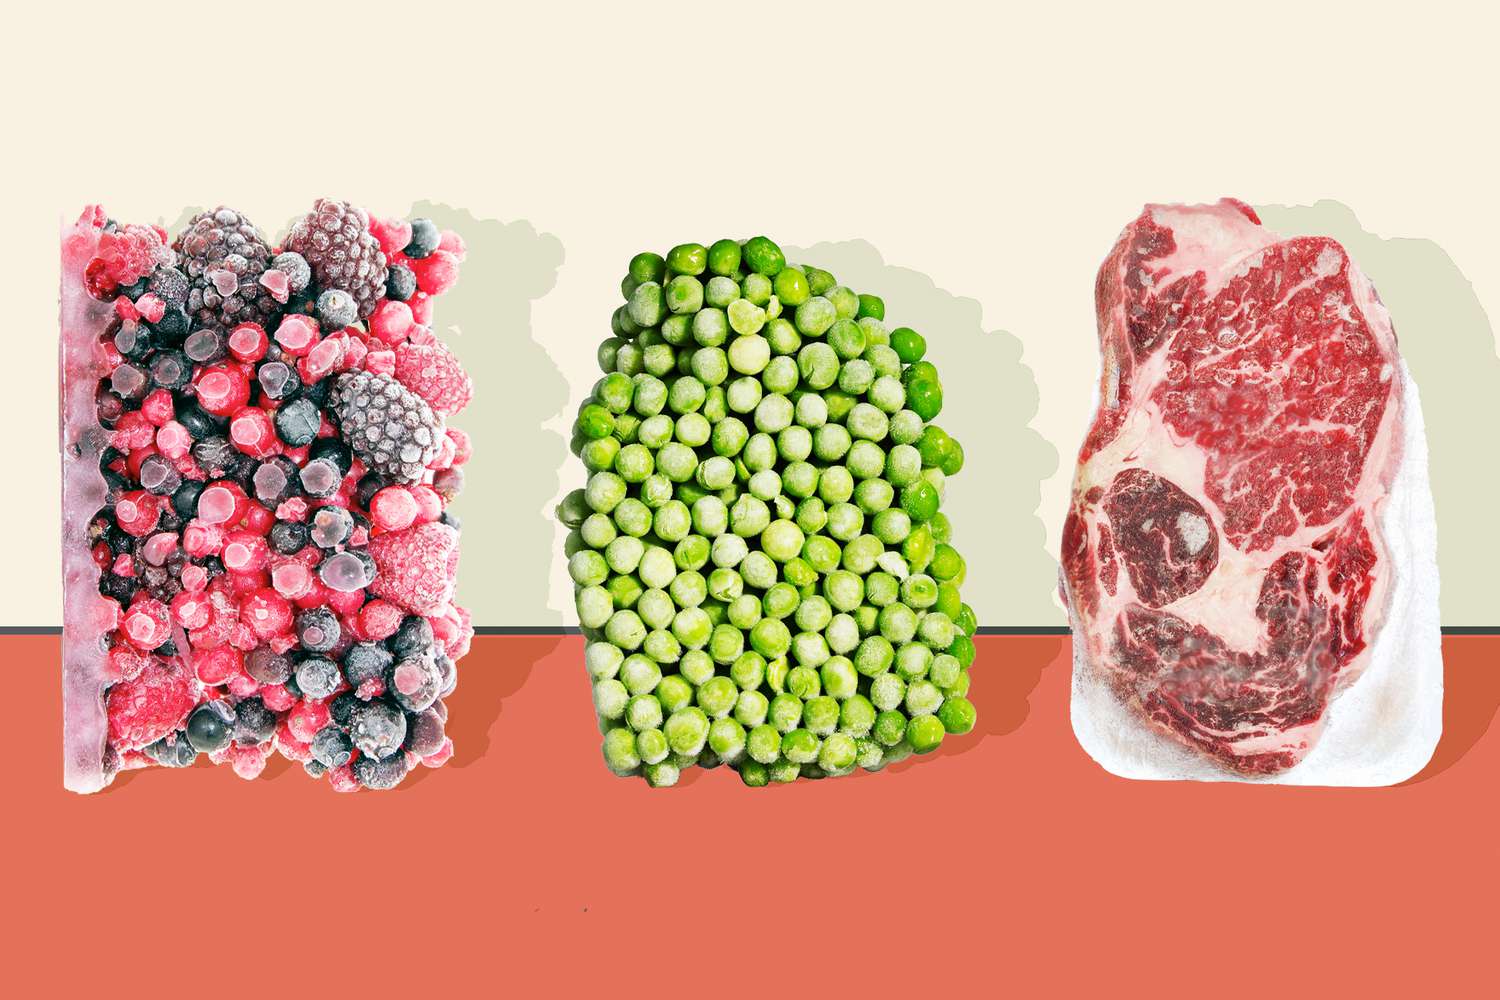 a block of frozen berries, frozen peas, and a frozen steak on a designed background